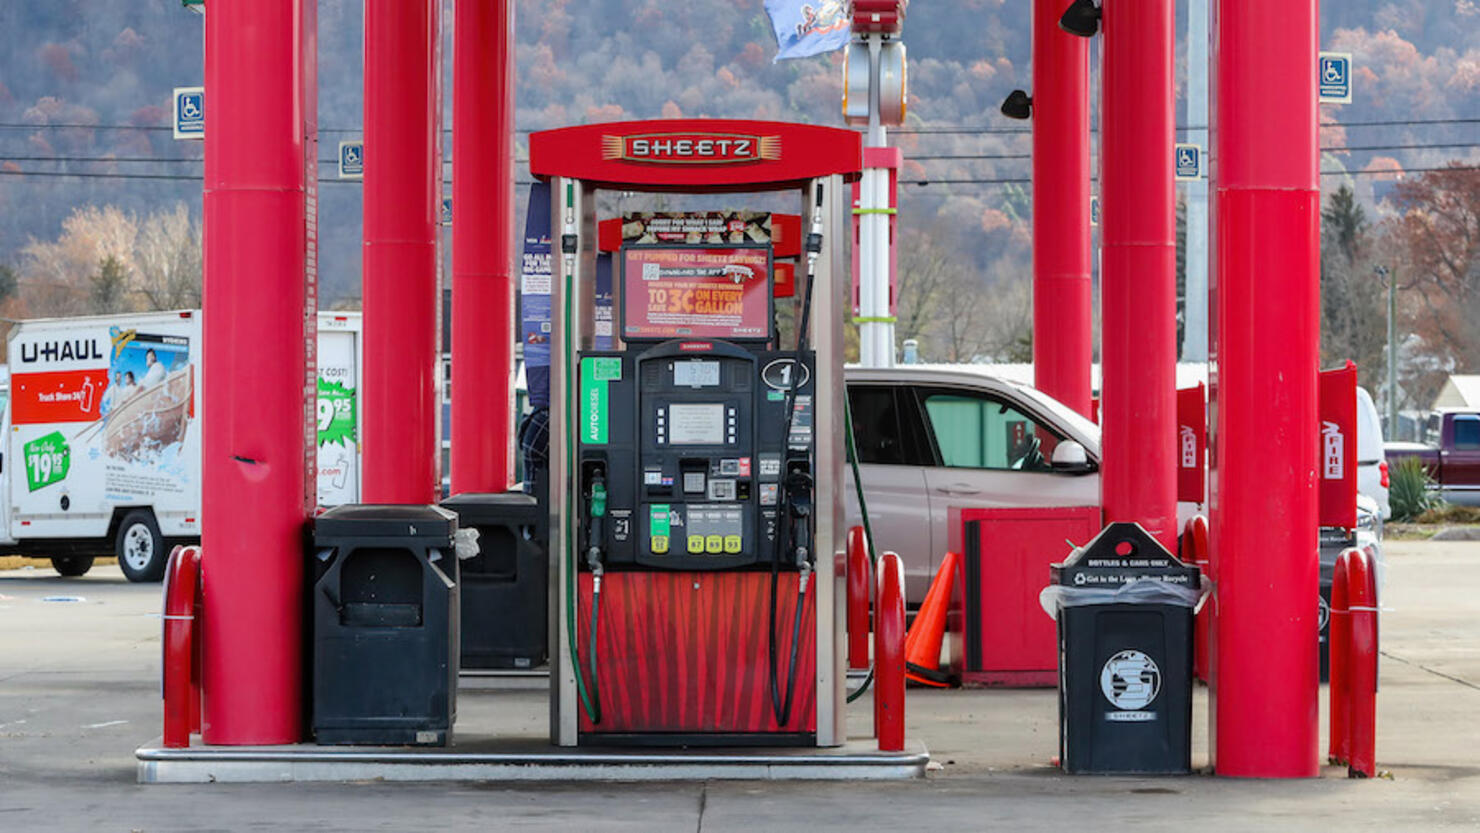 A gas pump is seen at a Sheetz convenience store.
Gasoline